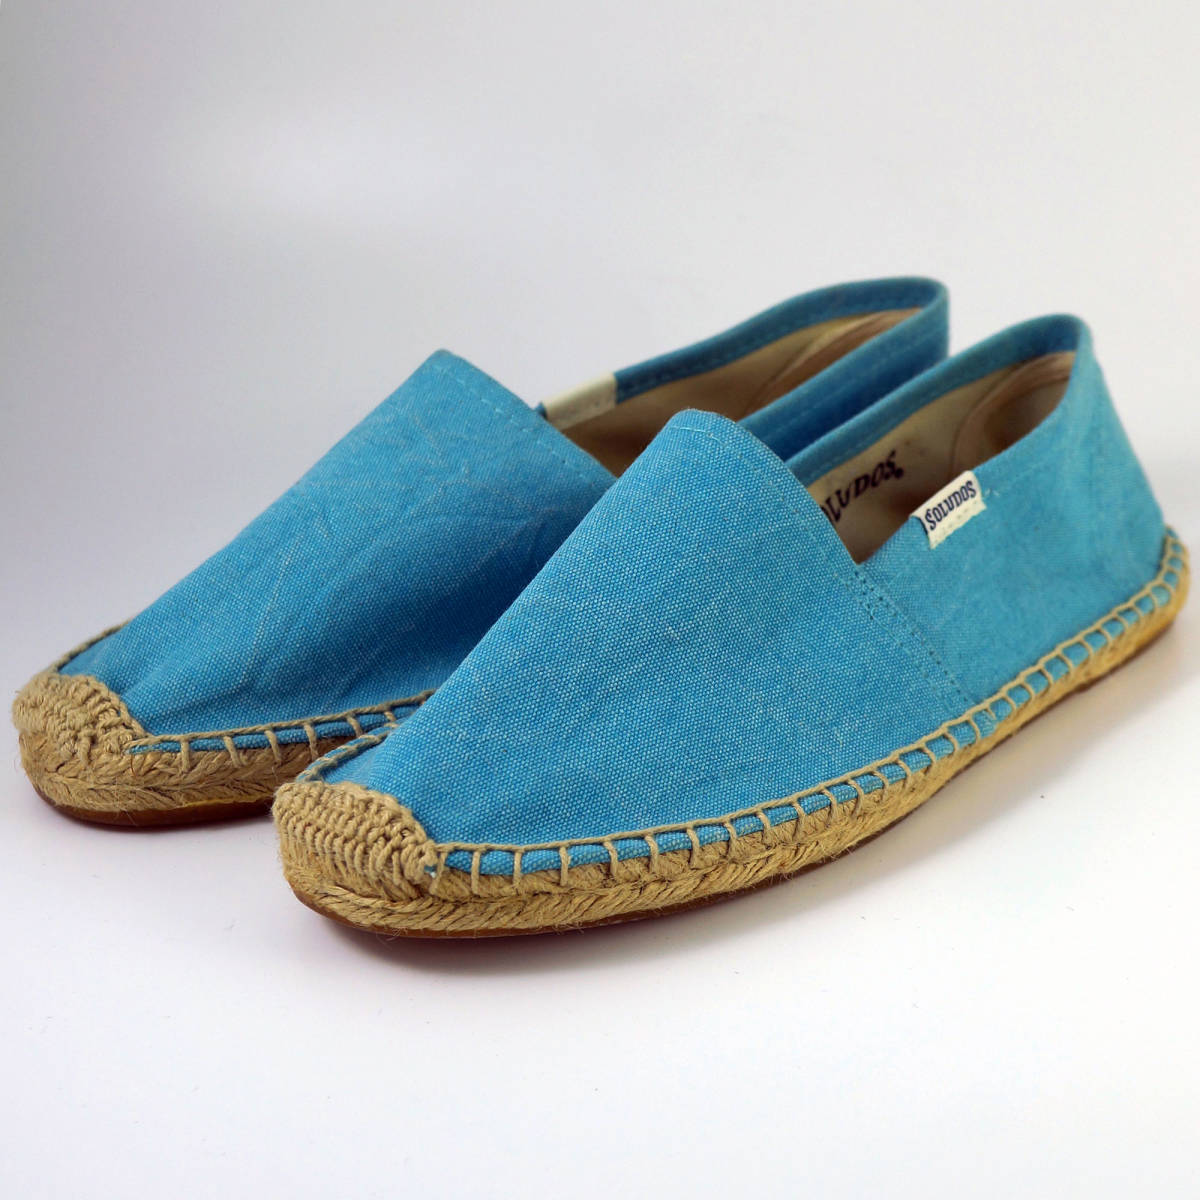 SOLUDOS Dali Espadrilles sandals 7(23.5-24cm) new goods sorudosdali espadrille 